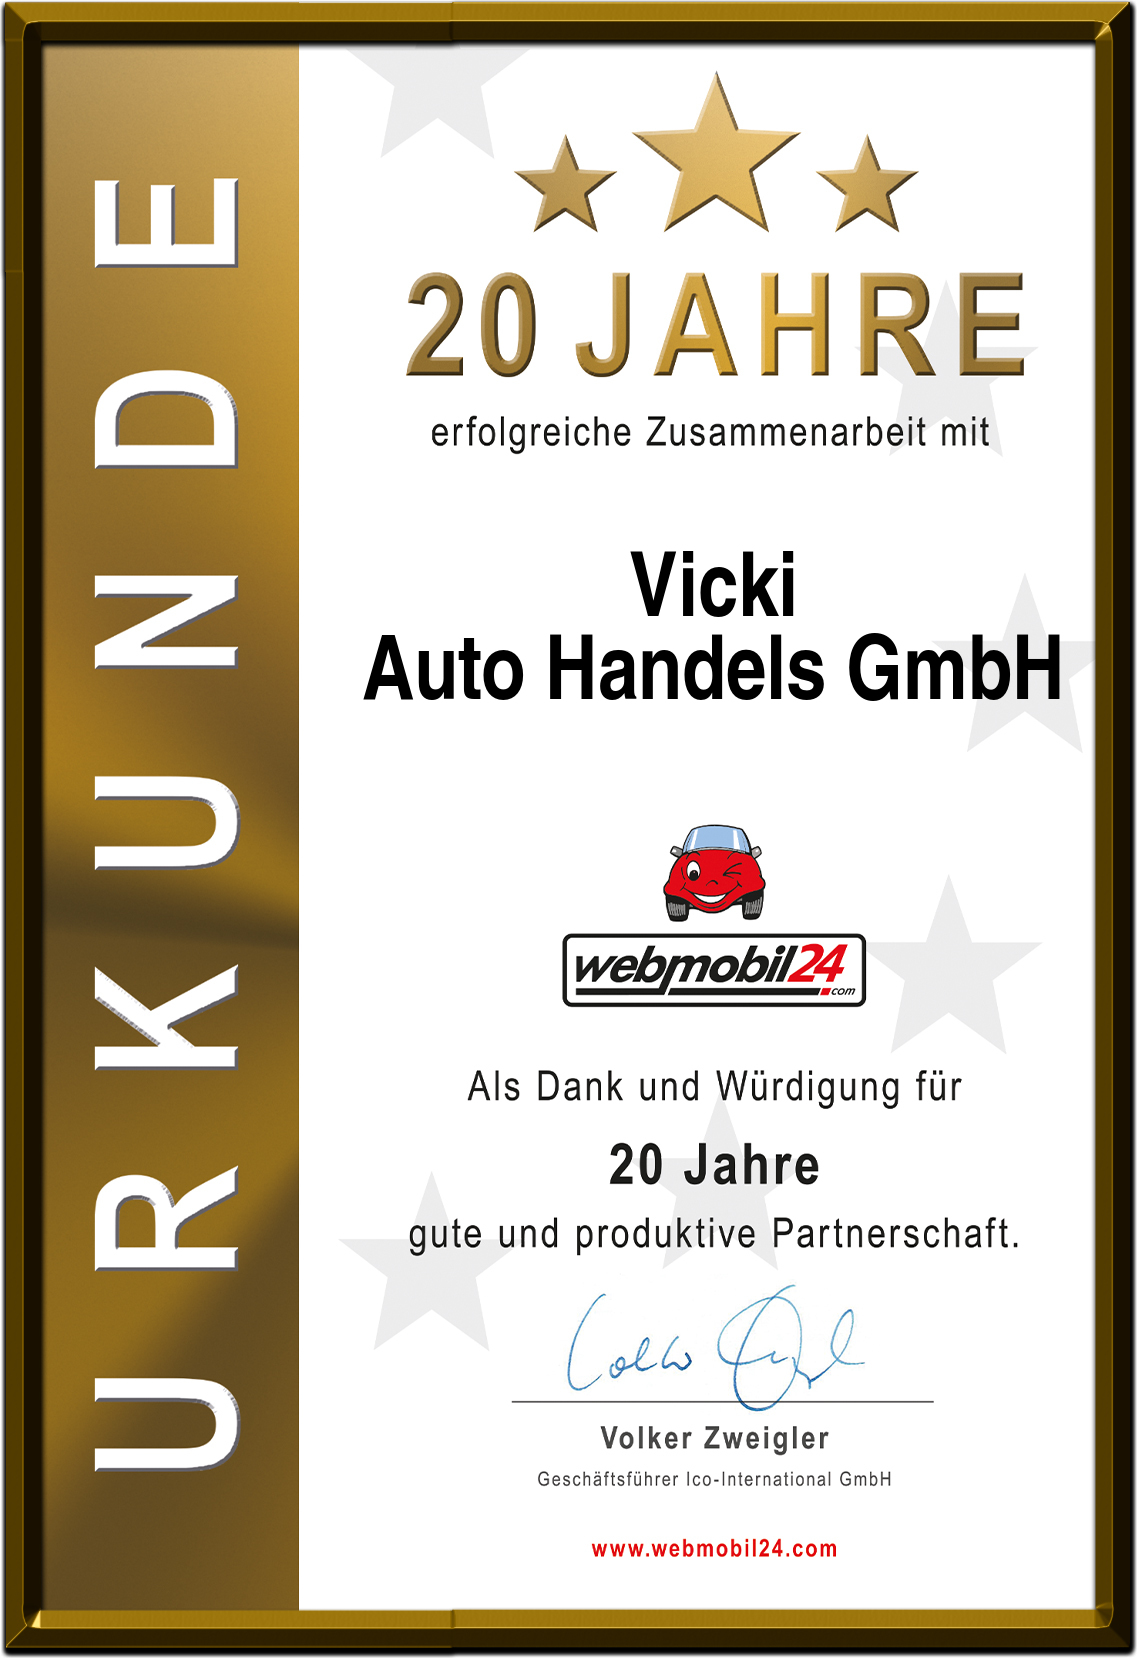 VickiAuto Handels GmbH